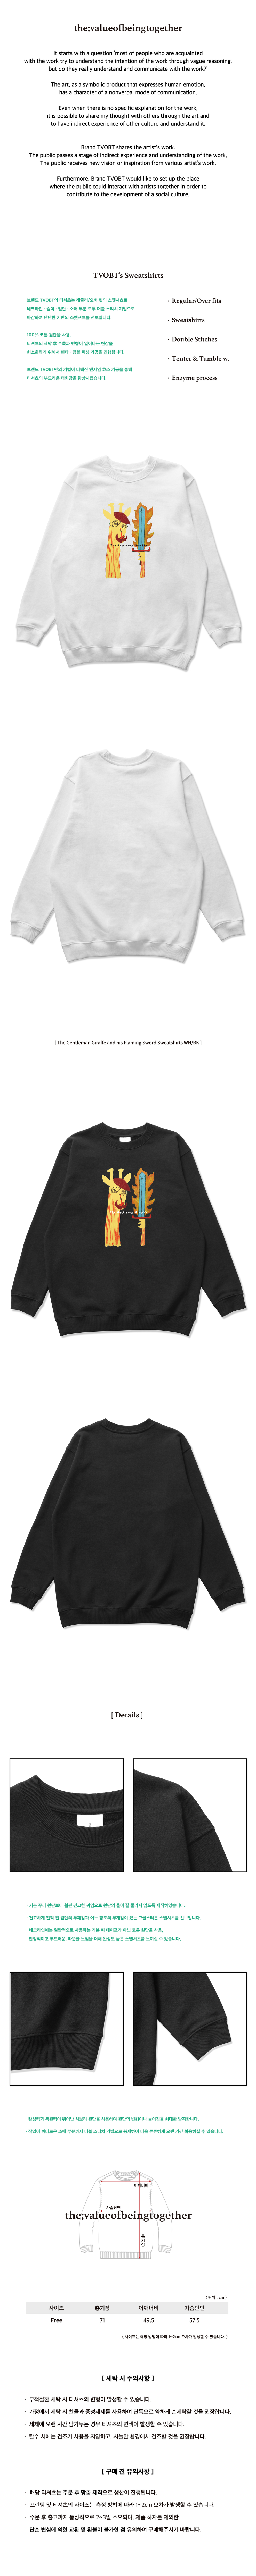 The Gentleman Giraffe and his Flaming Sword Sweatshirts WH/BK